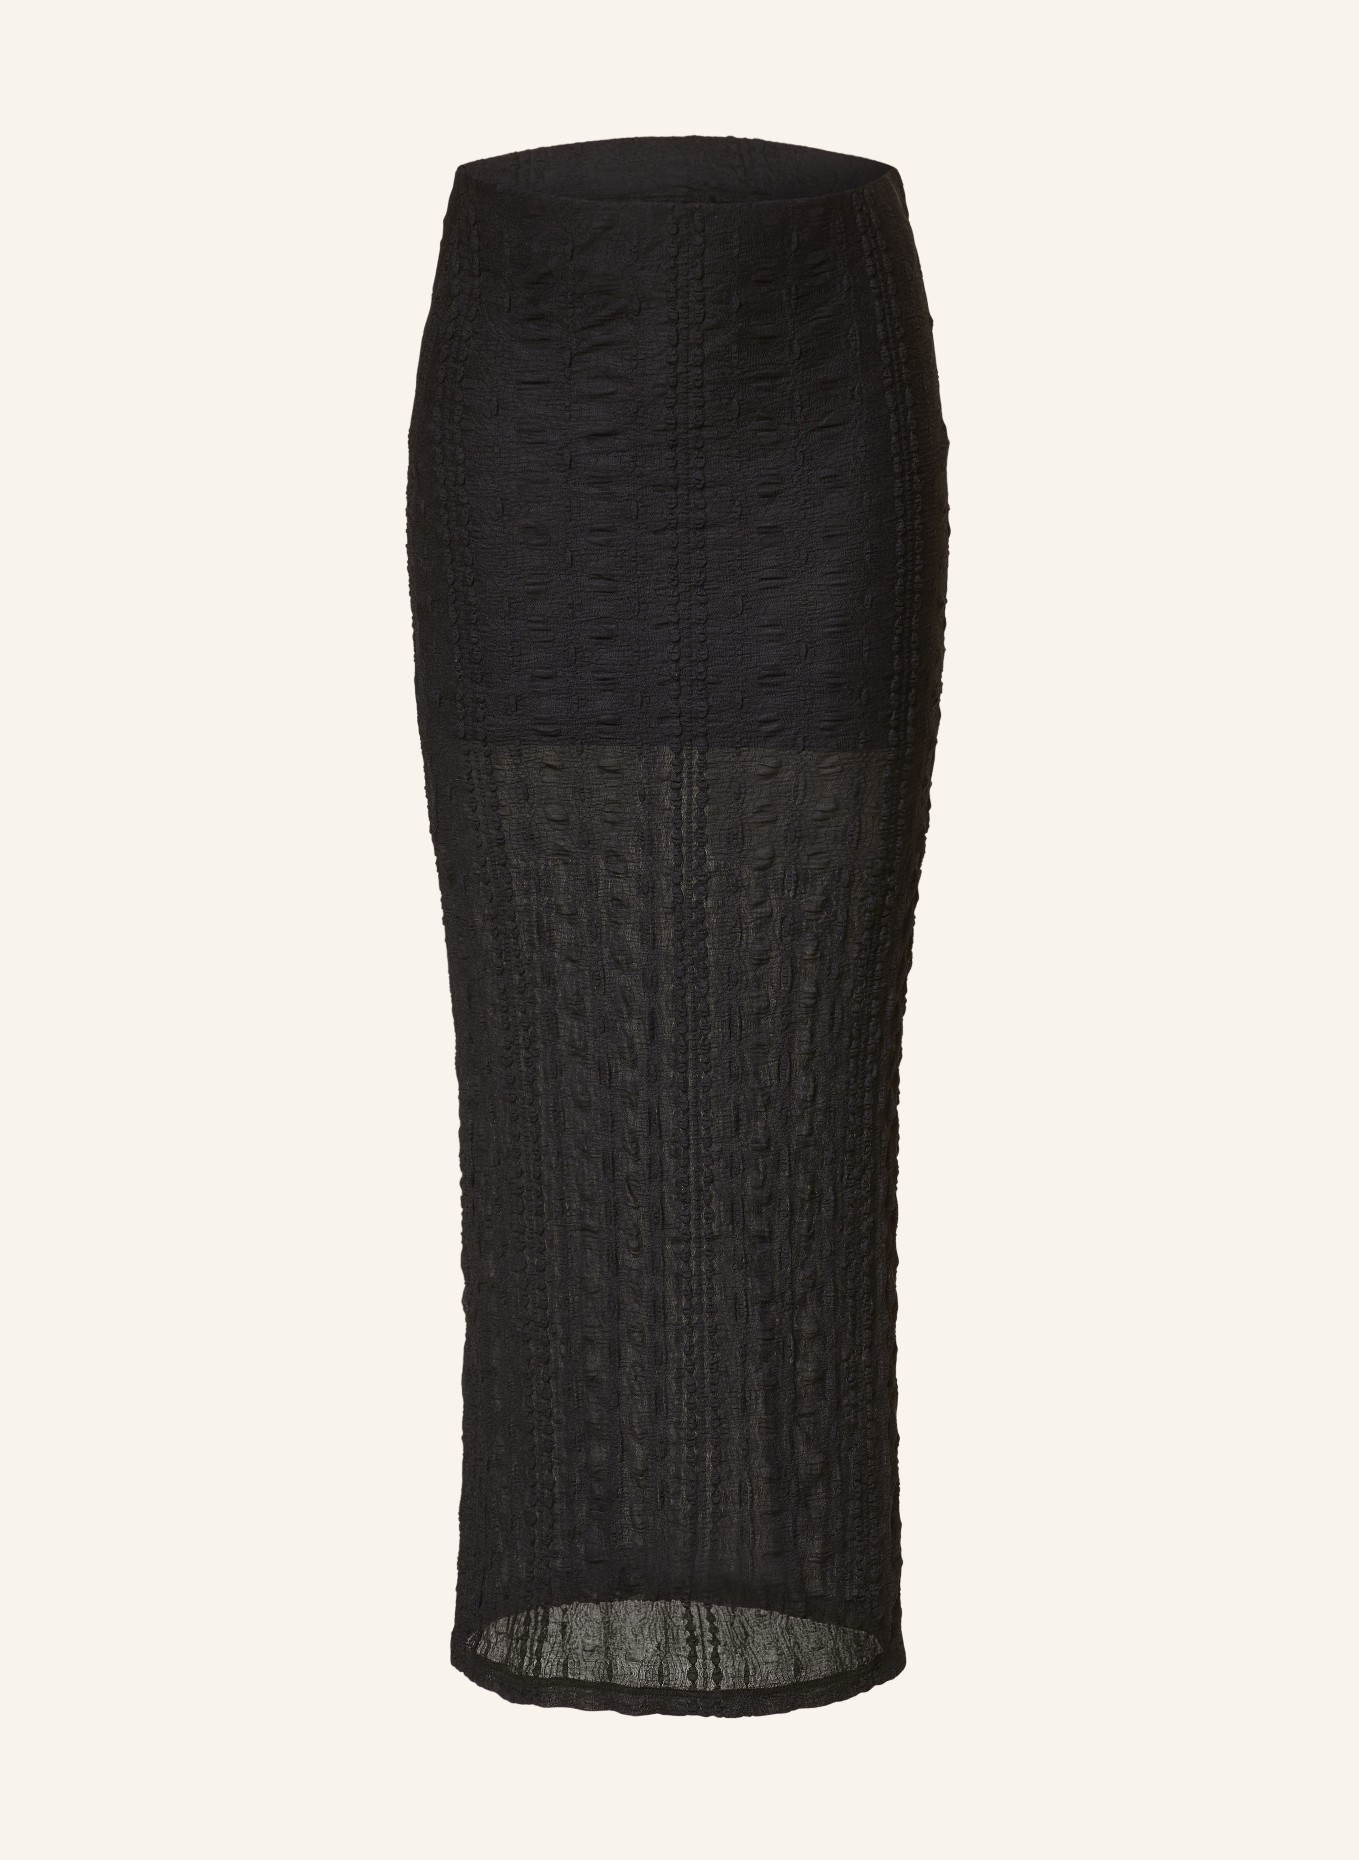 gina tricot Skirt, Color: BLACK (Image 1)